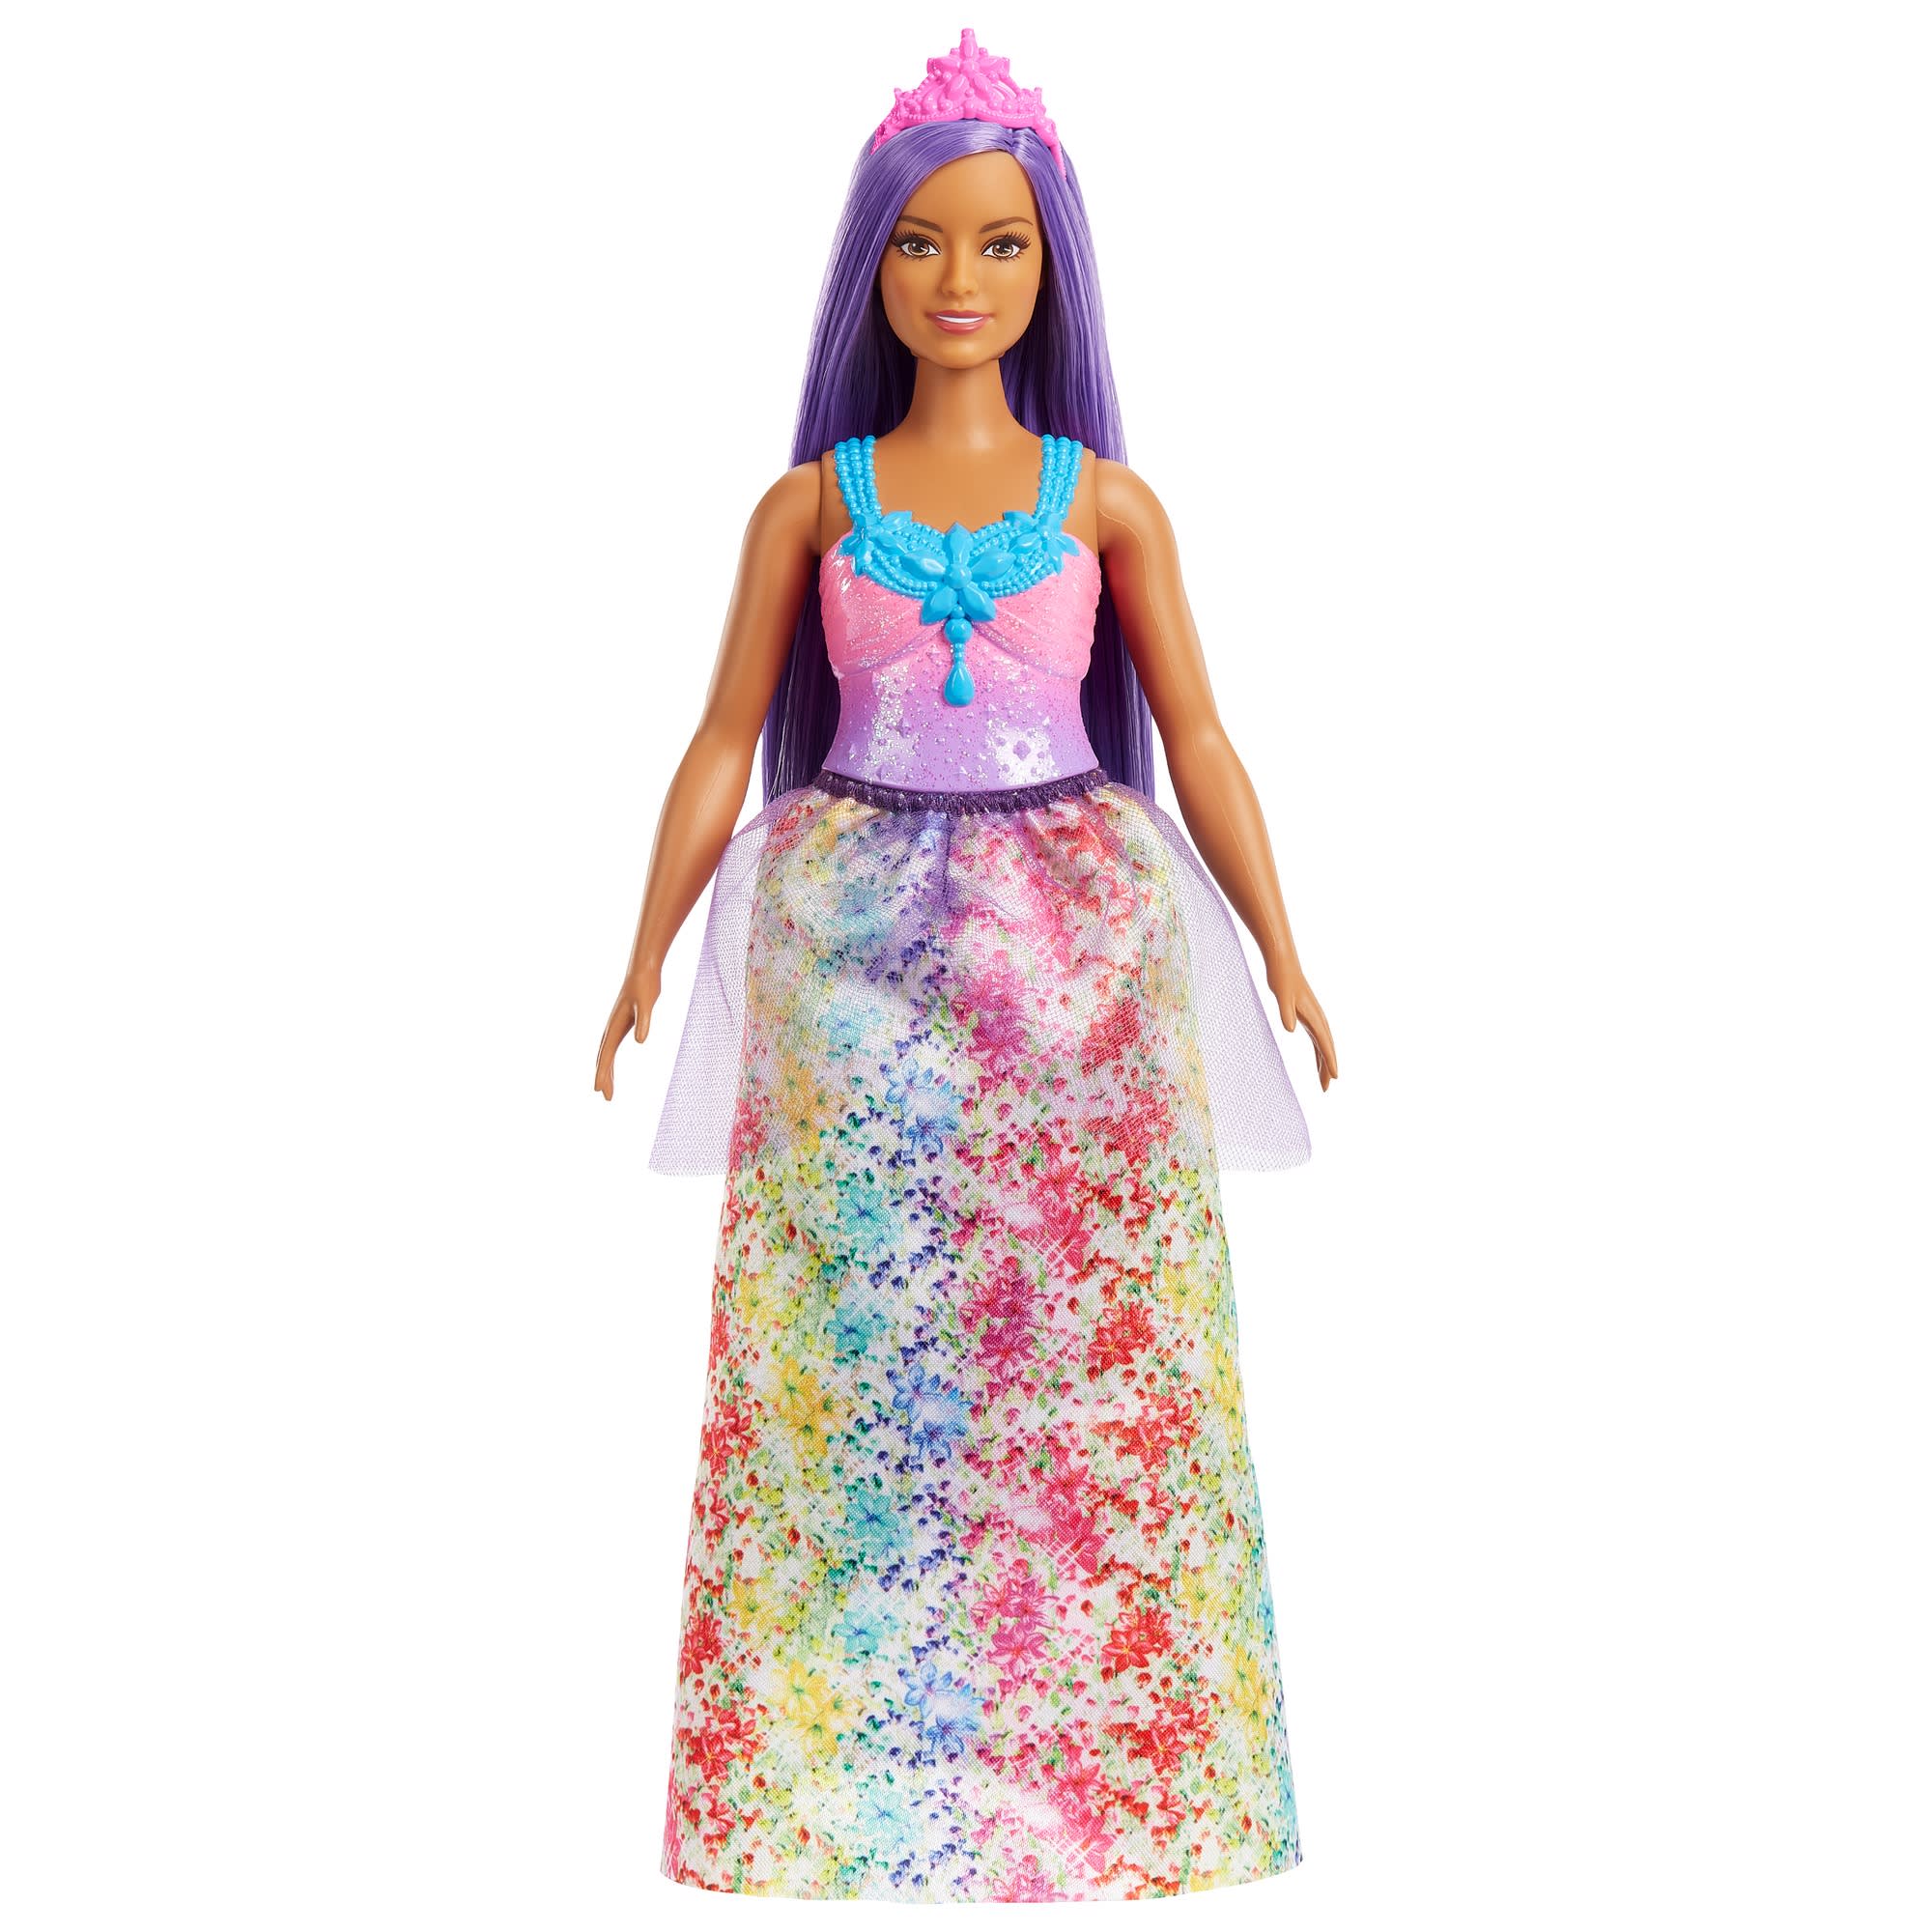 Barbie - Dreamtopia Princess Doll (HGR17)